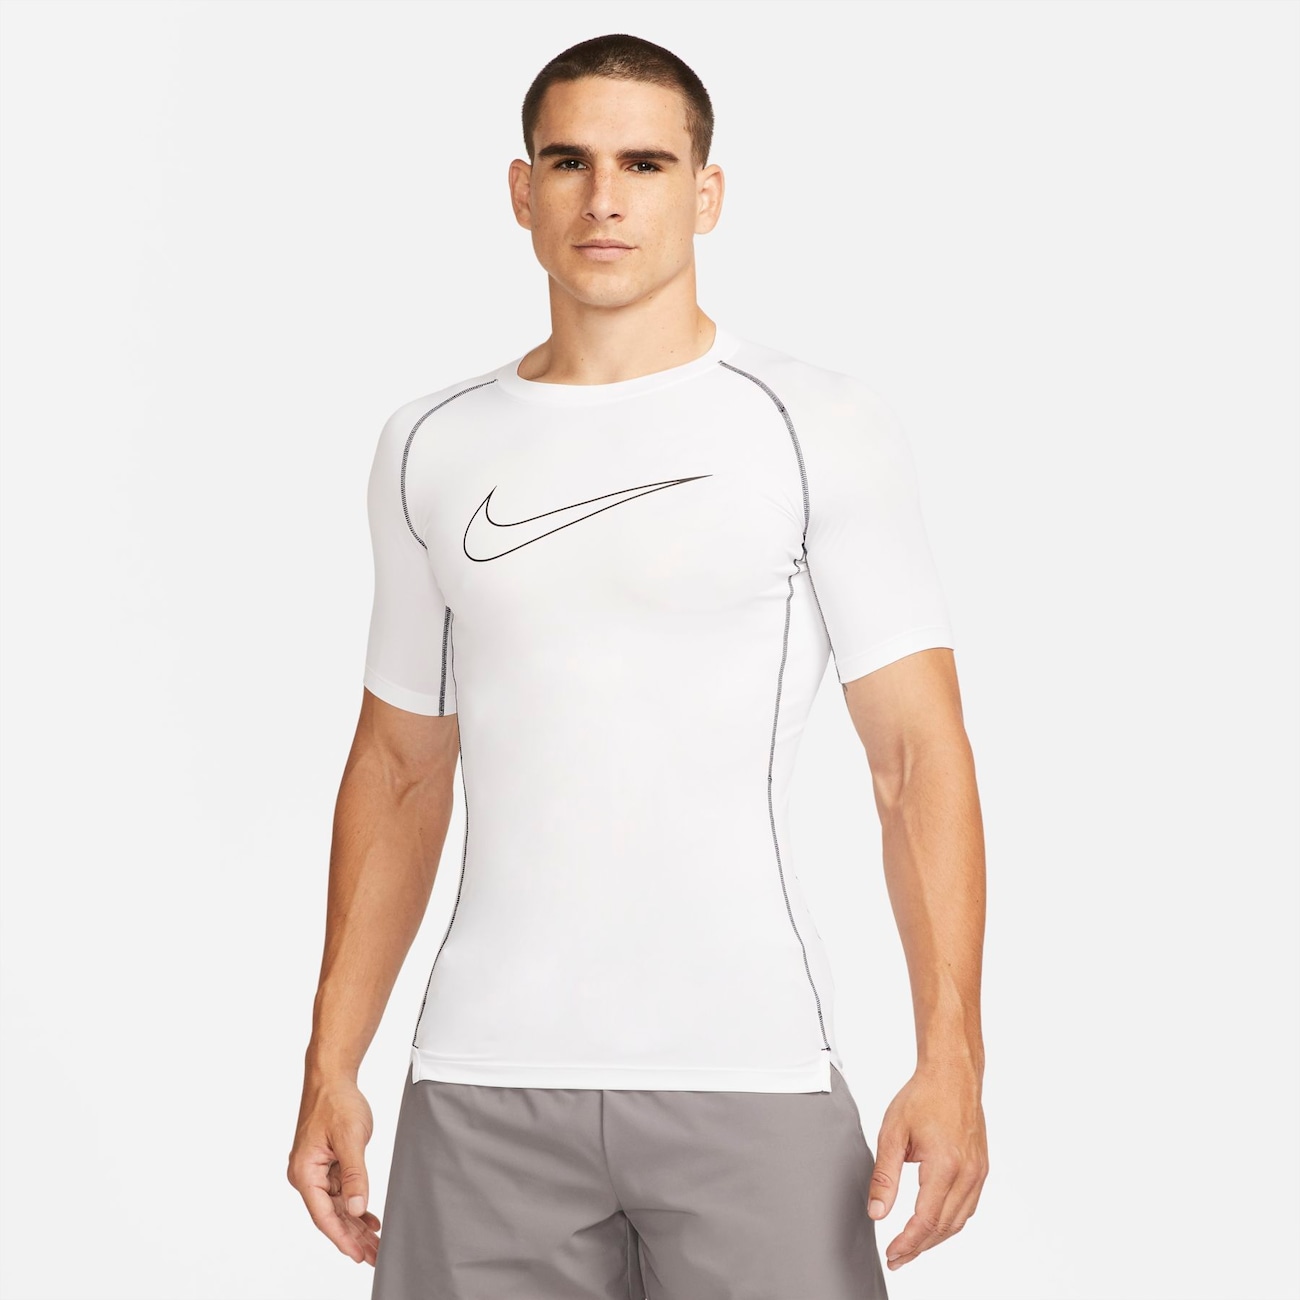 Camisa de Compressão Nike Hypercool 3.0 - Masculina